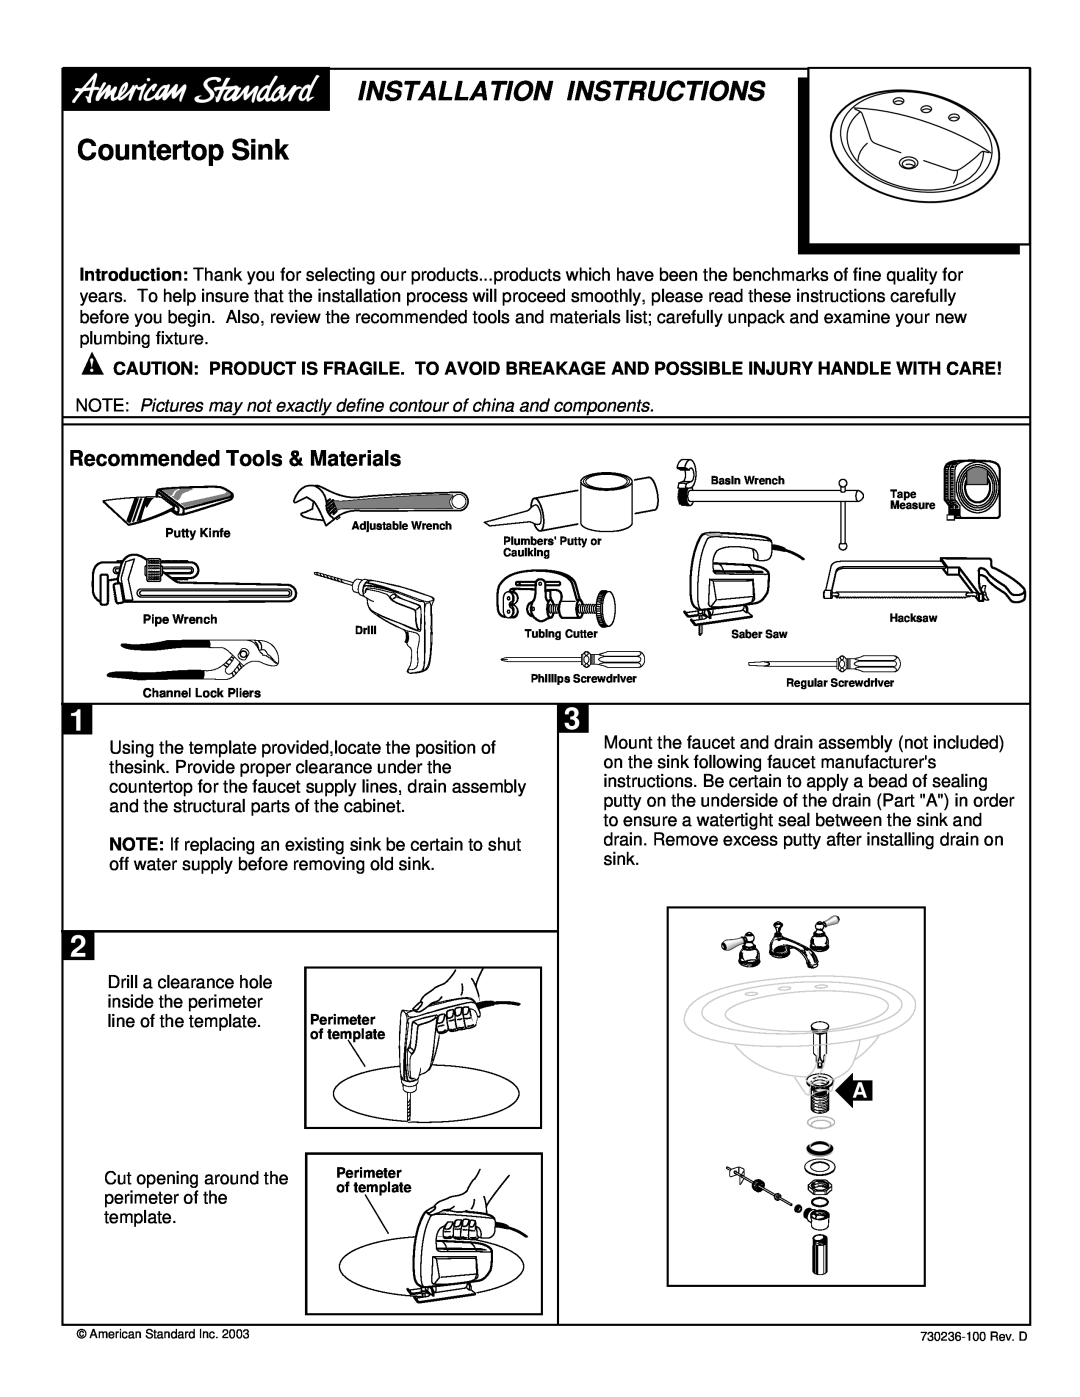 American Standard 730236-100 installation instructions Countertop Sink, Installation Instructions 